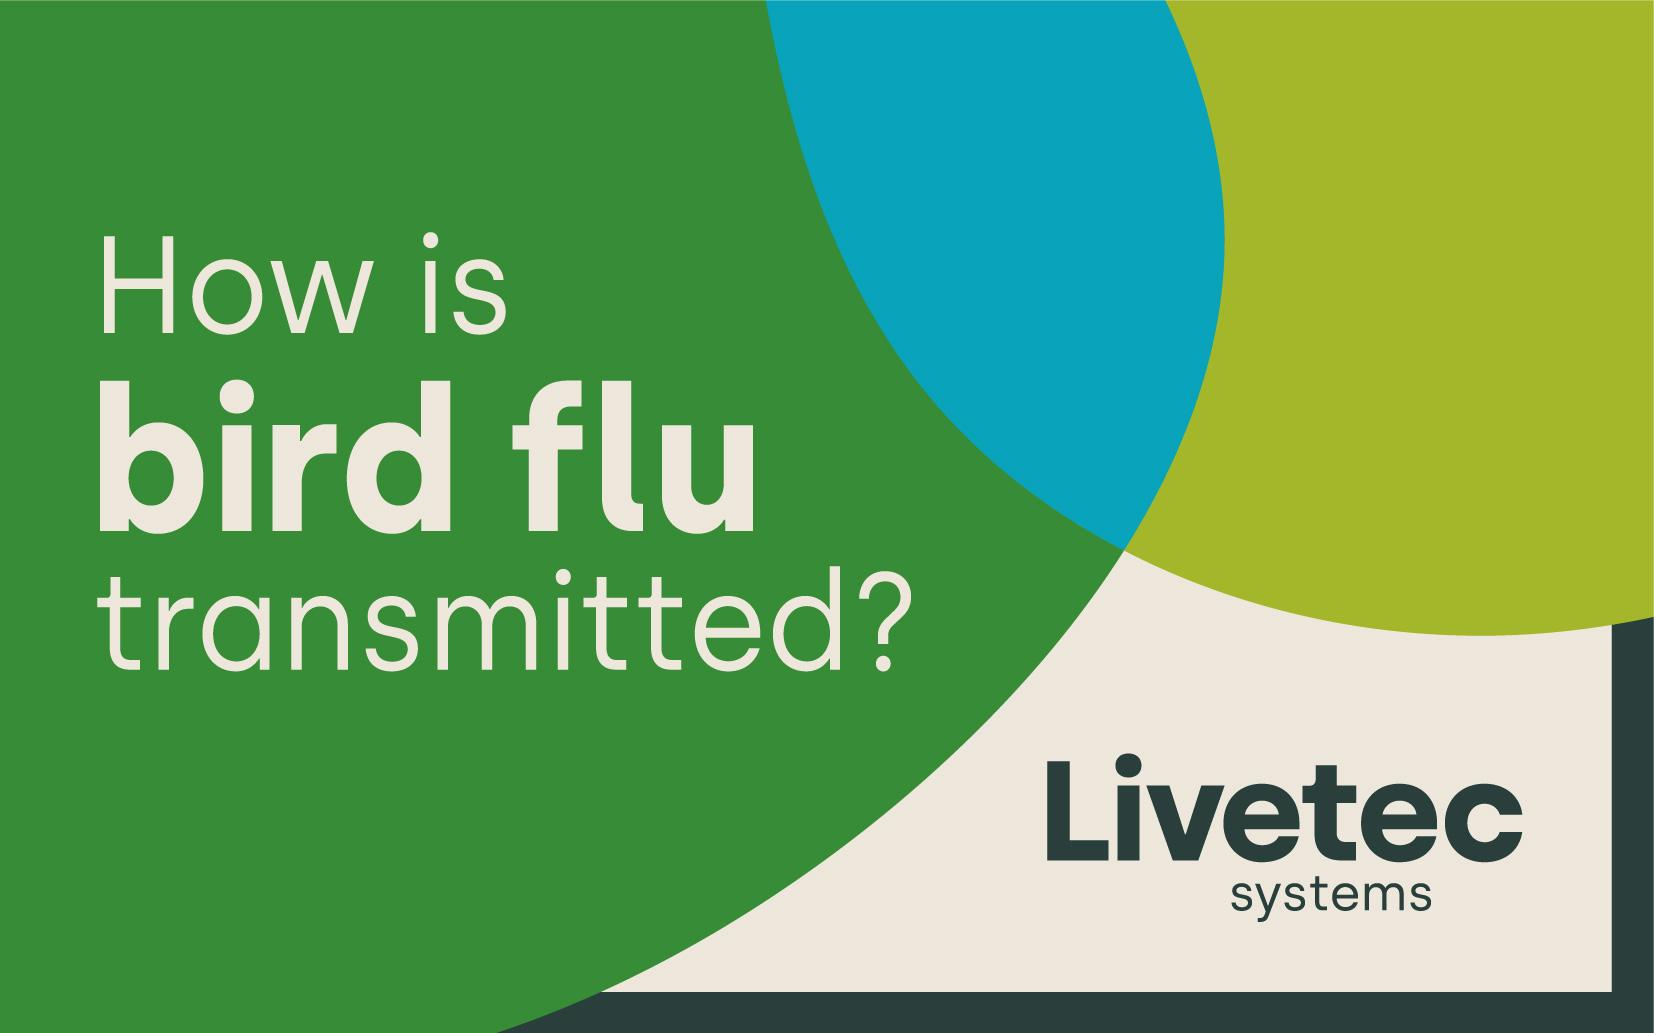 How is bird flu transmitted?